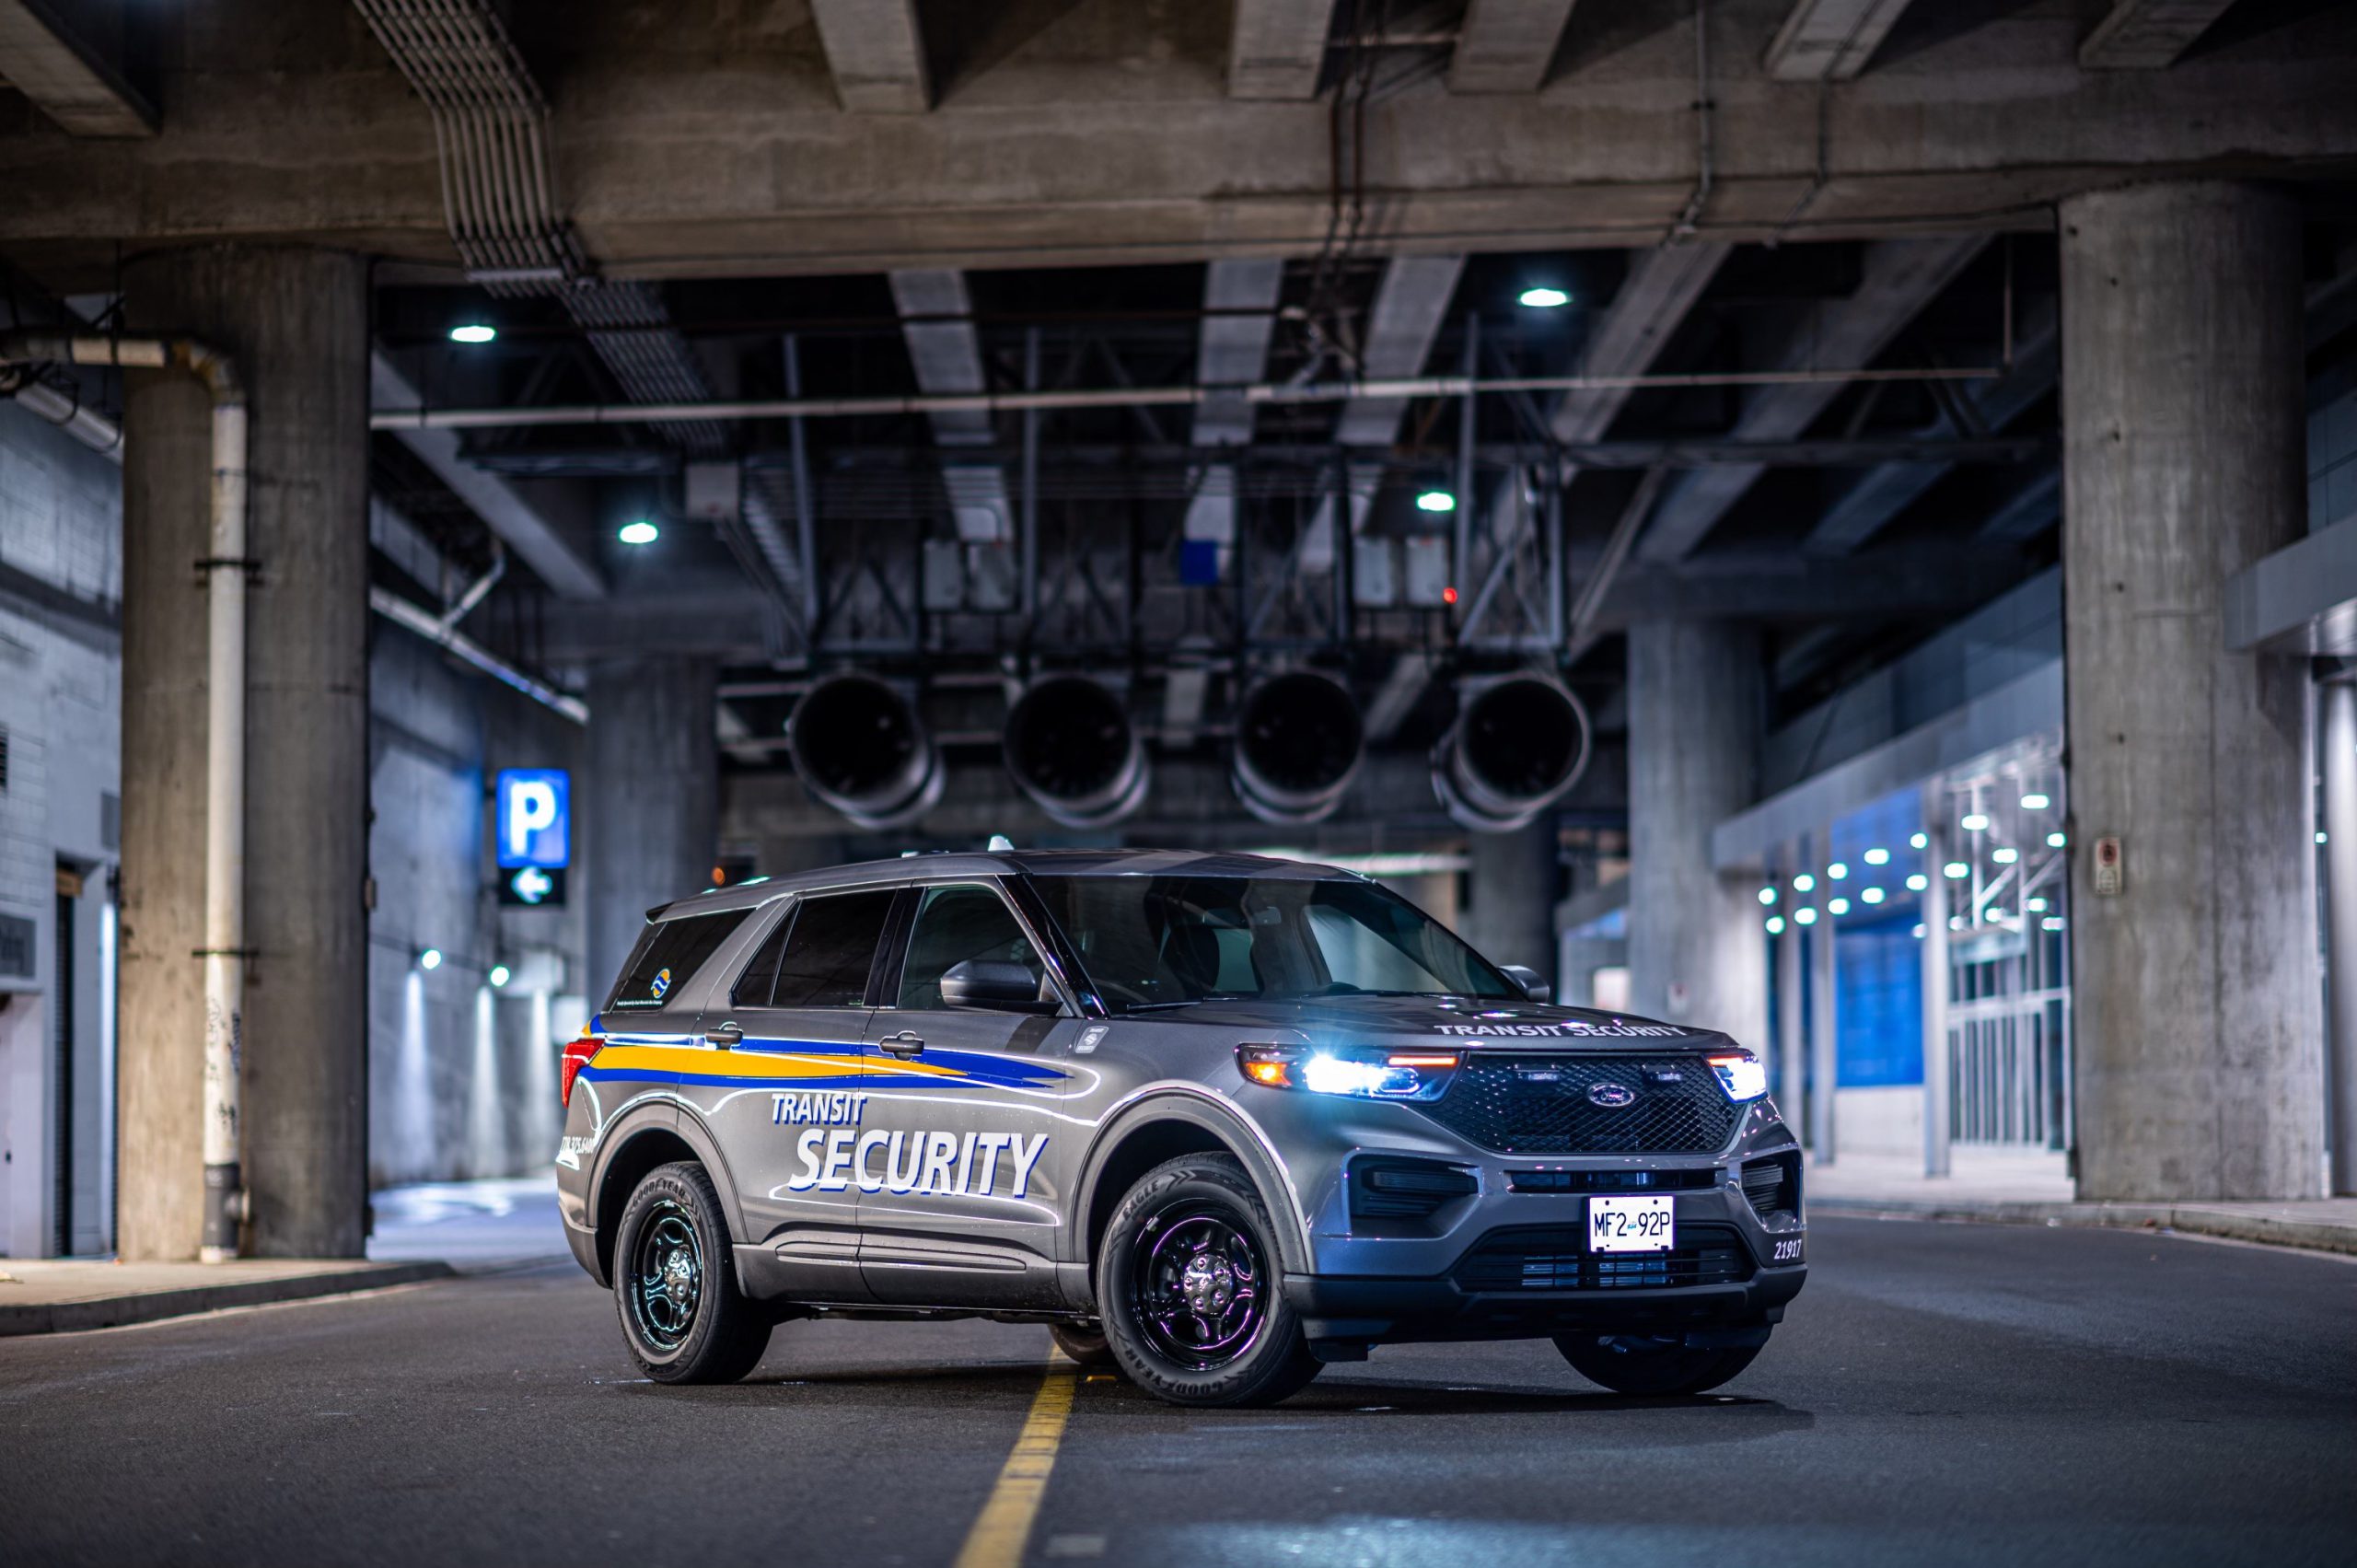 Transit Security hybrid electric patrol cars